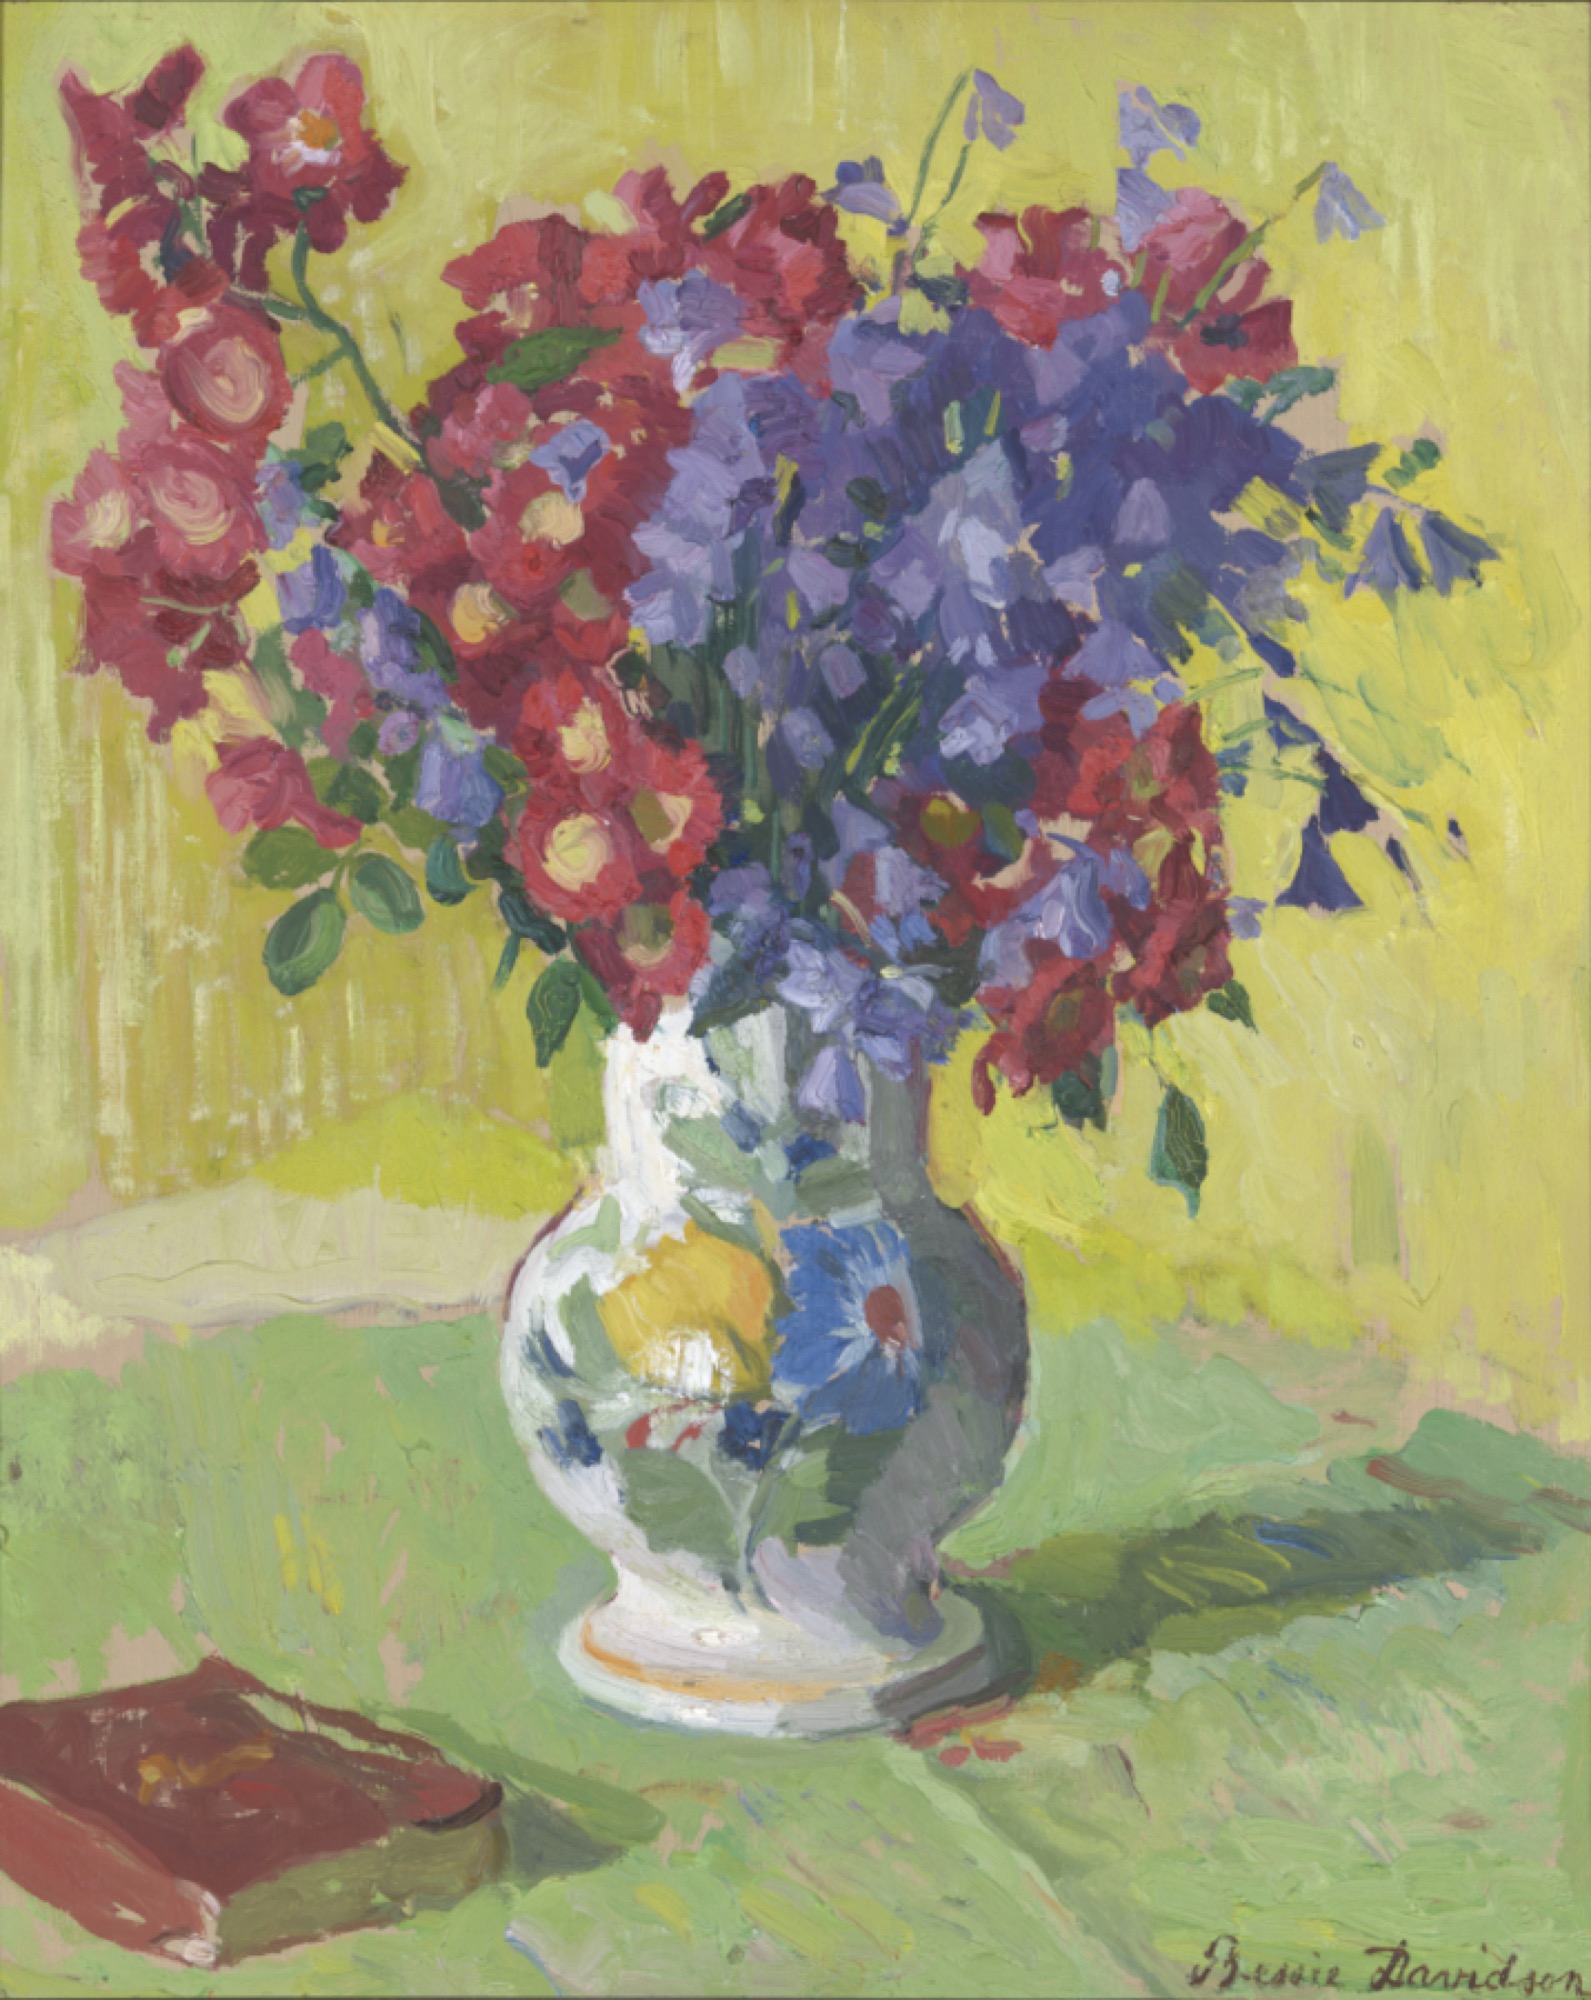 Bessie Davidson, <em>Bouquet</em>, c. 1945, oil on board, 45 x 37 cm, private collection, courtesy of Ian Rogers Fine Art.